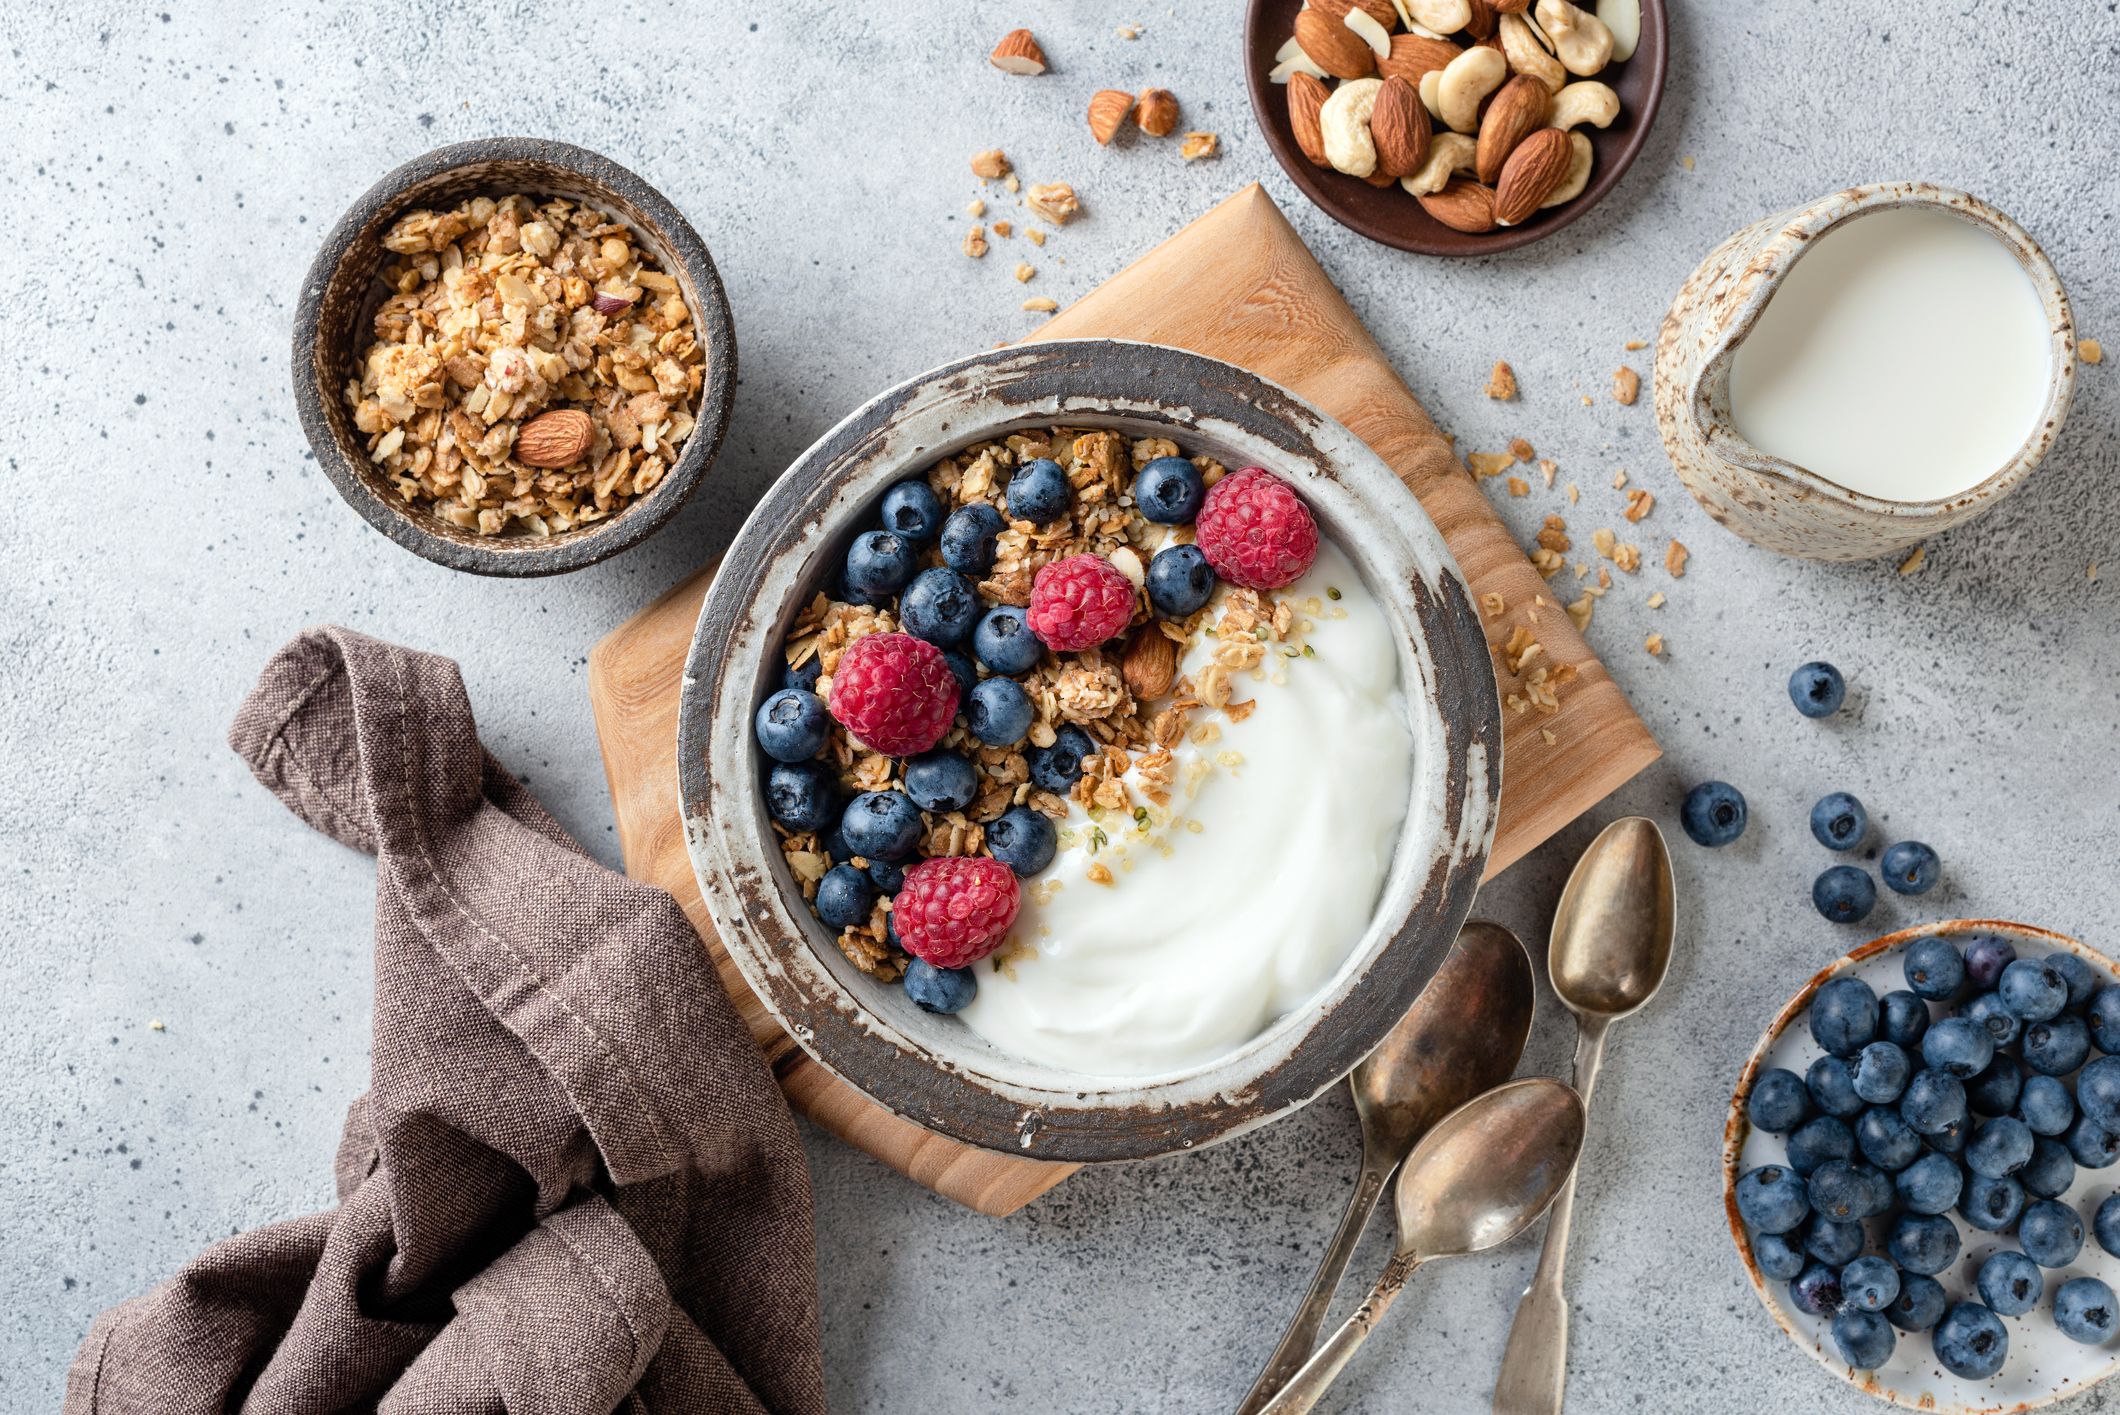 https://hips.hearstapps.com/hmg-prod/images/yogurt-granola-bowl-with-berries-royalty-free-image-1668387119.jpg